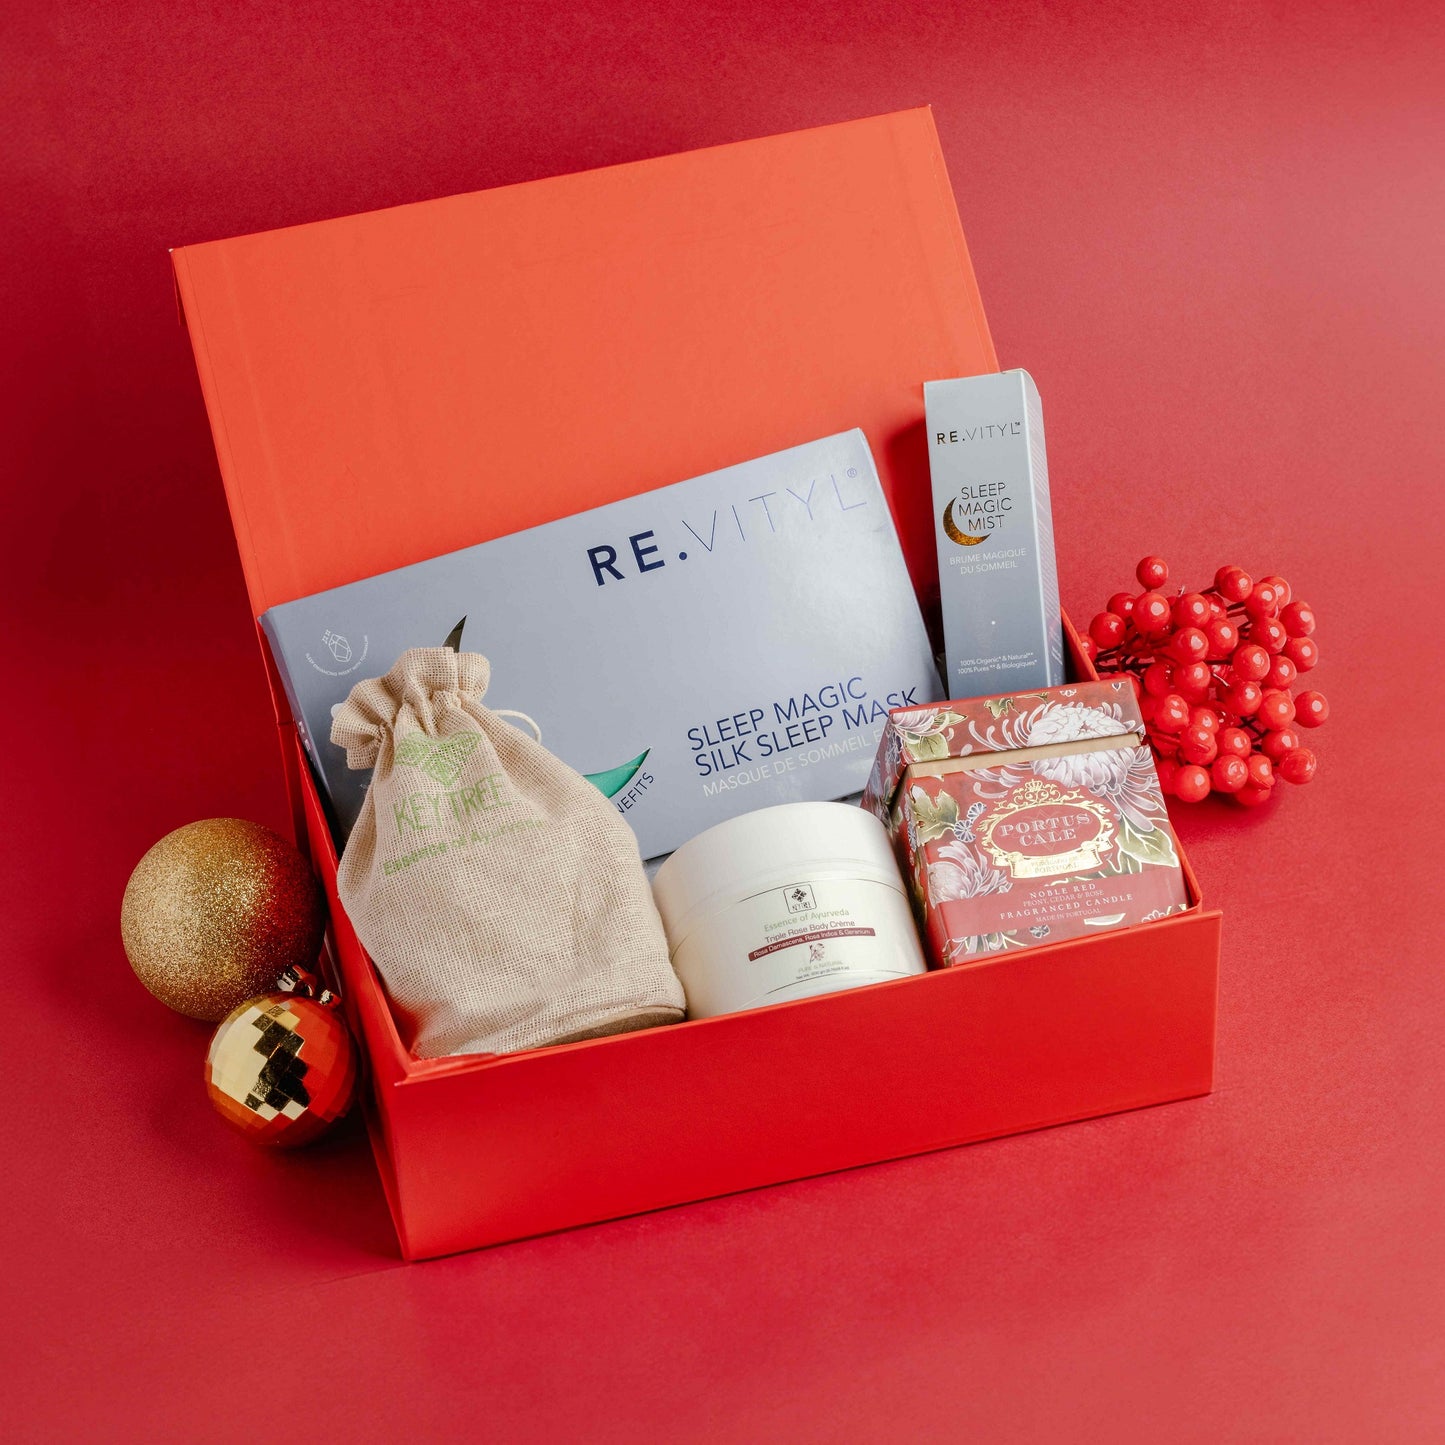 Spa - Festive Gift Box 水療中心 - 節慶禮盒套裝